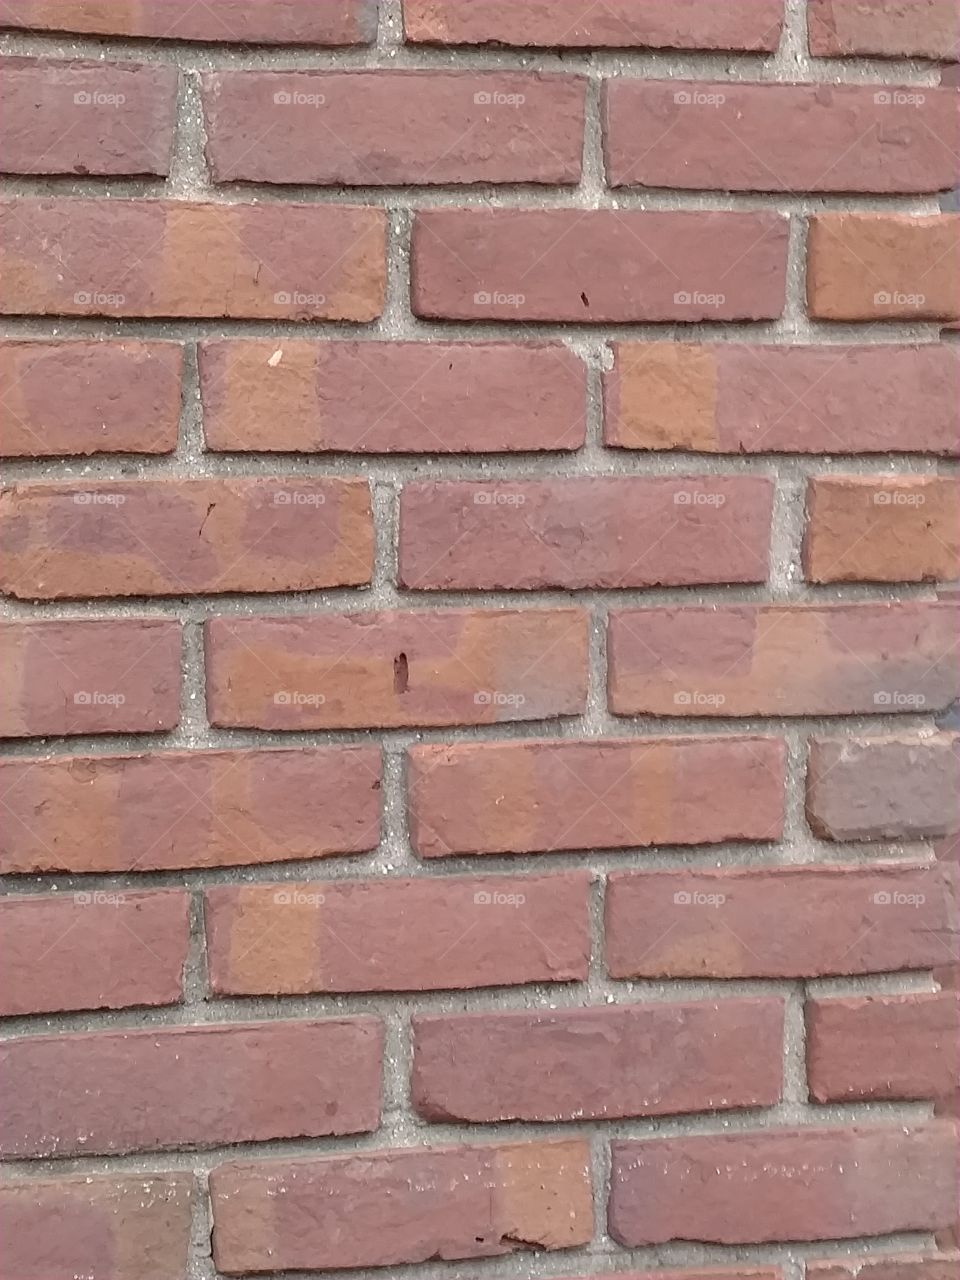 Brick Wall with a keyed hole